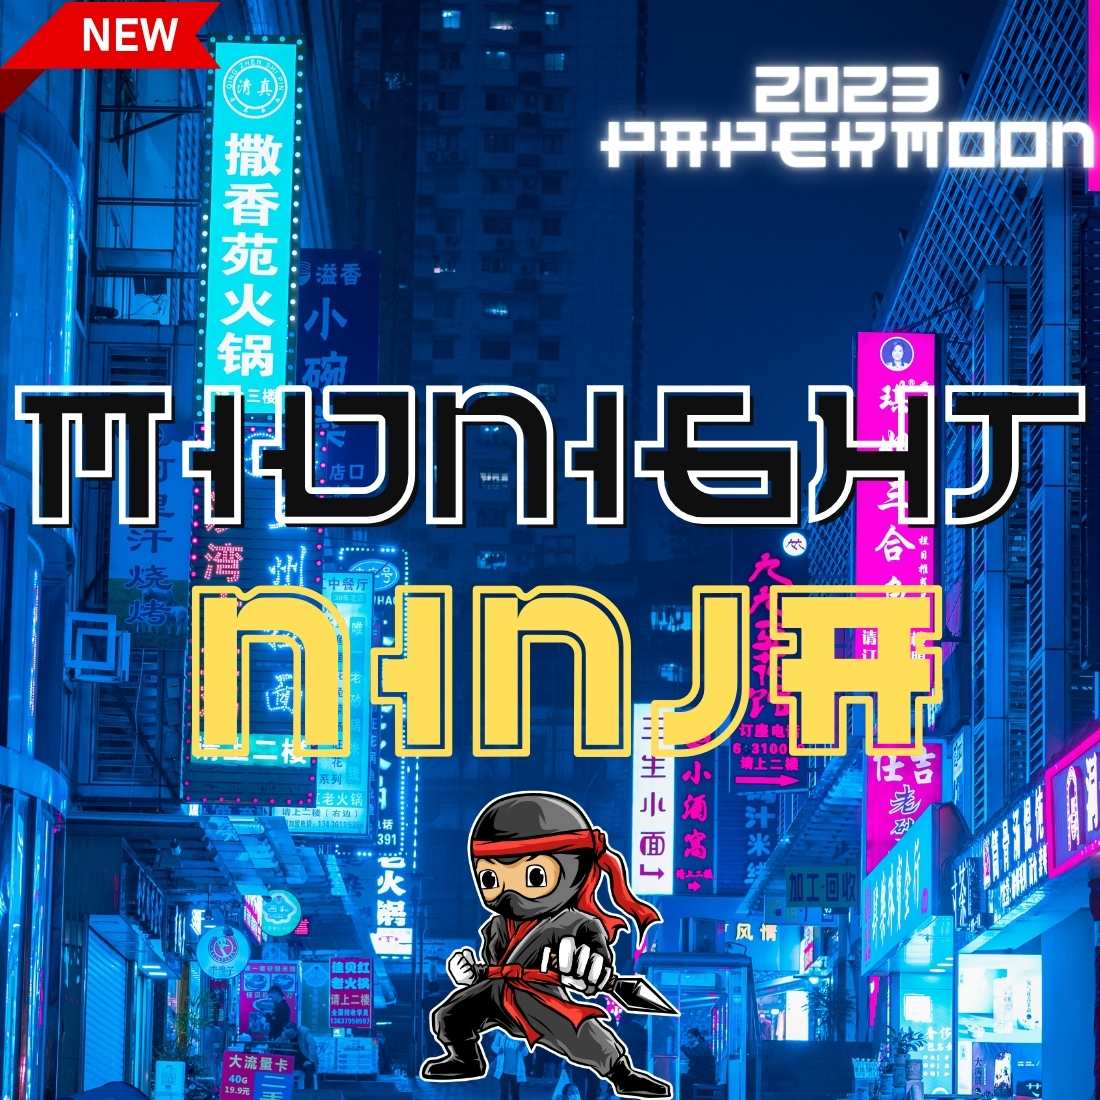 Midnight Ninja Samurai Font cover image.